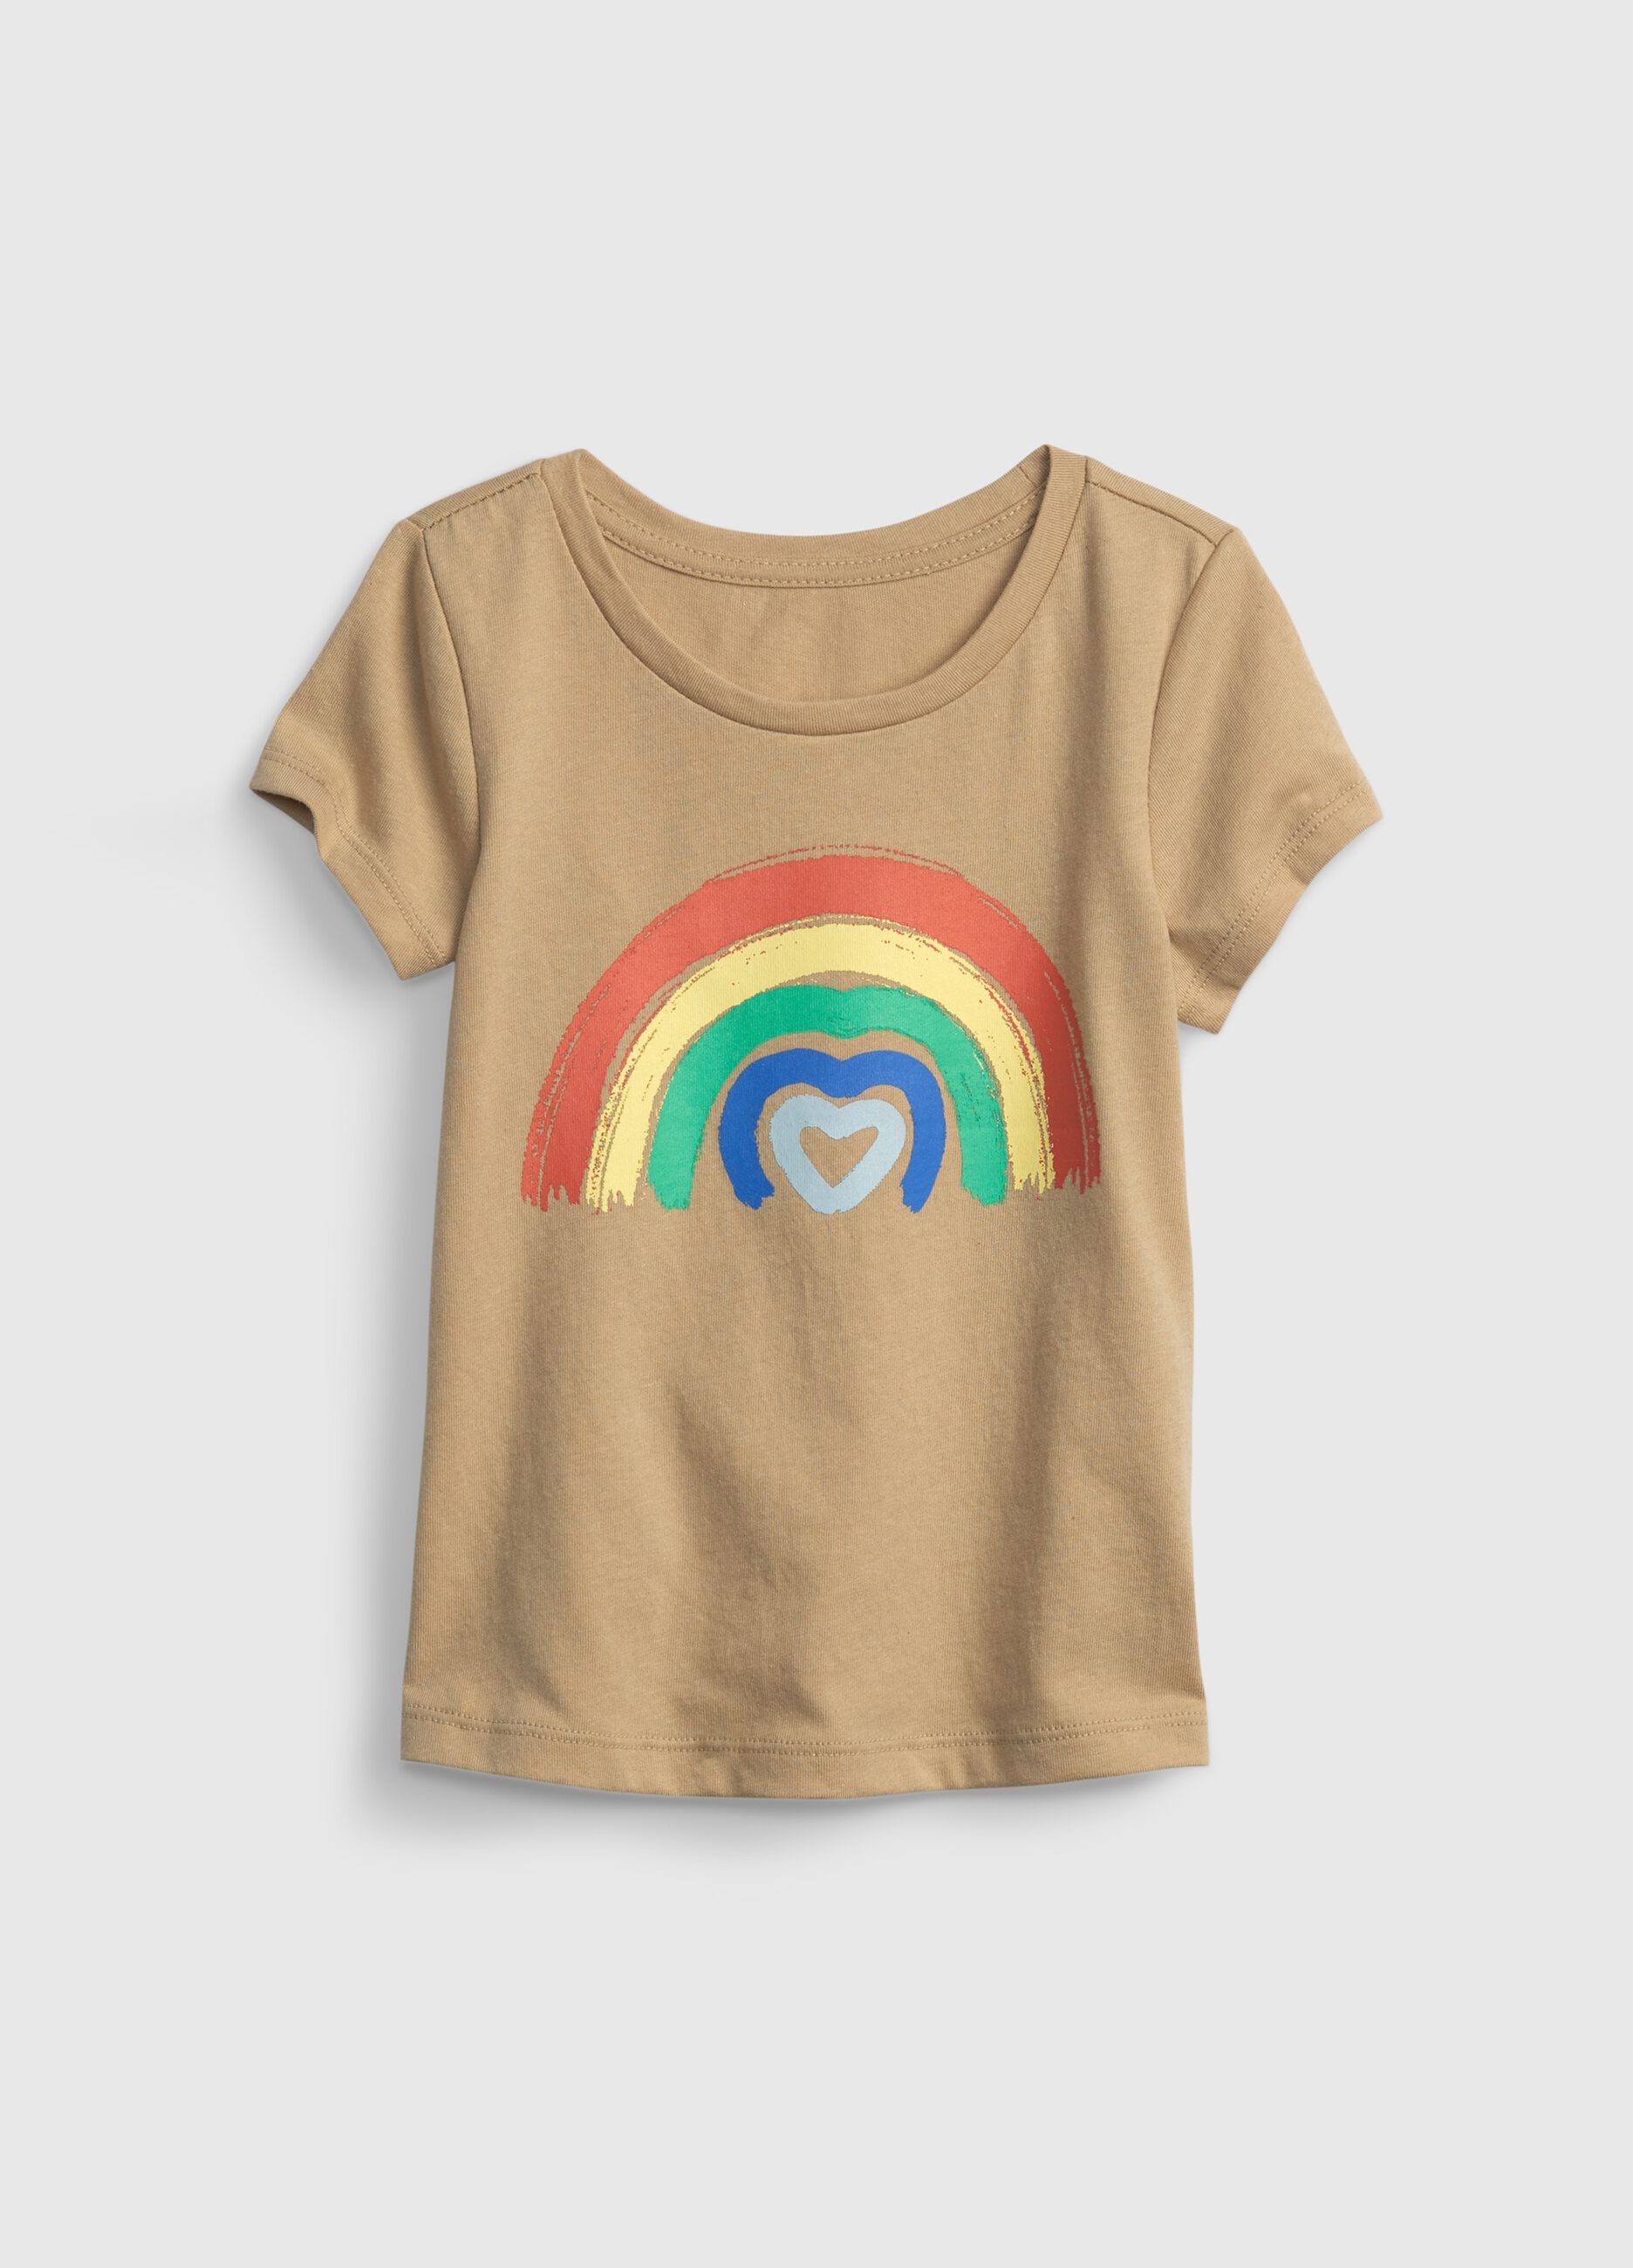 T-shirt with rainbow print